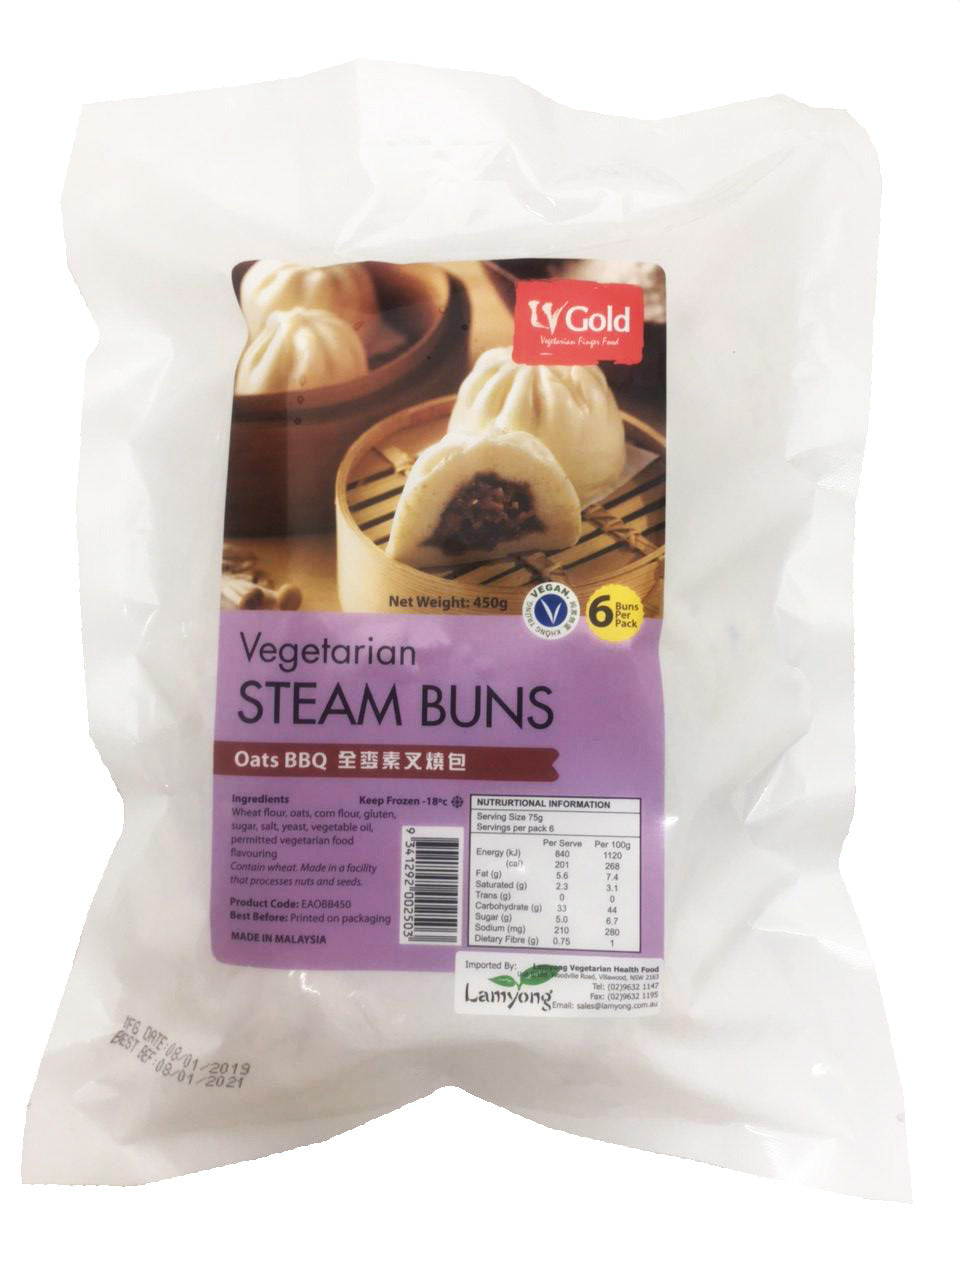 LV Gold Vegan BBQ Buns (Wholemeal pastry) 6pcs